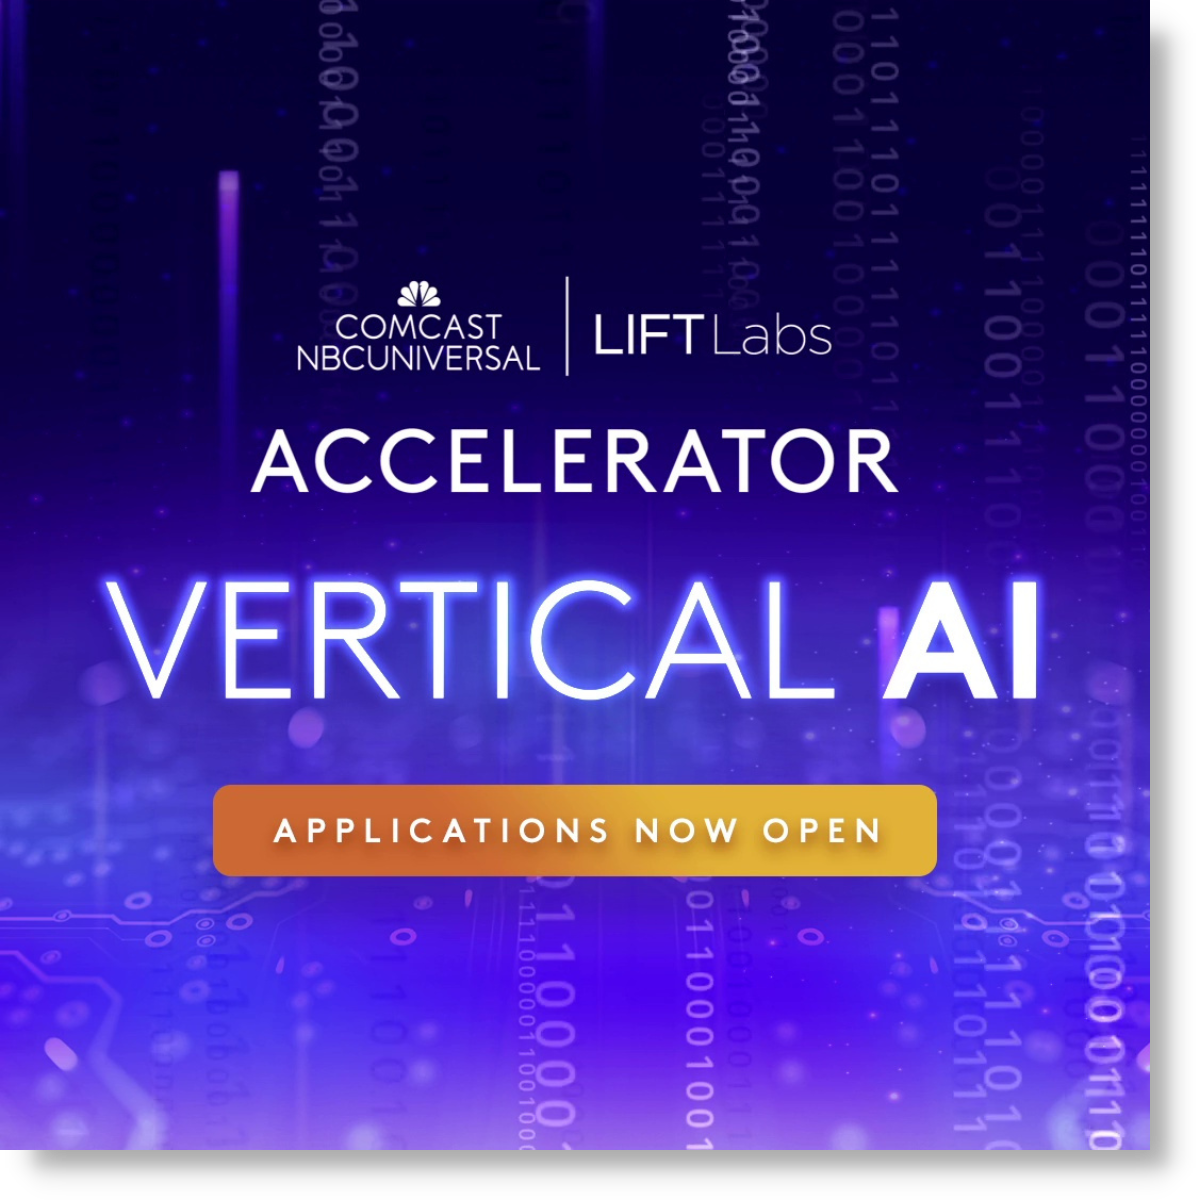 Comcast NBC Universal LIFT Labs Accelerator Vertical AI